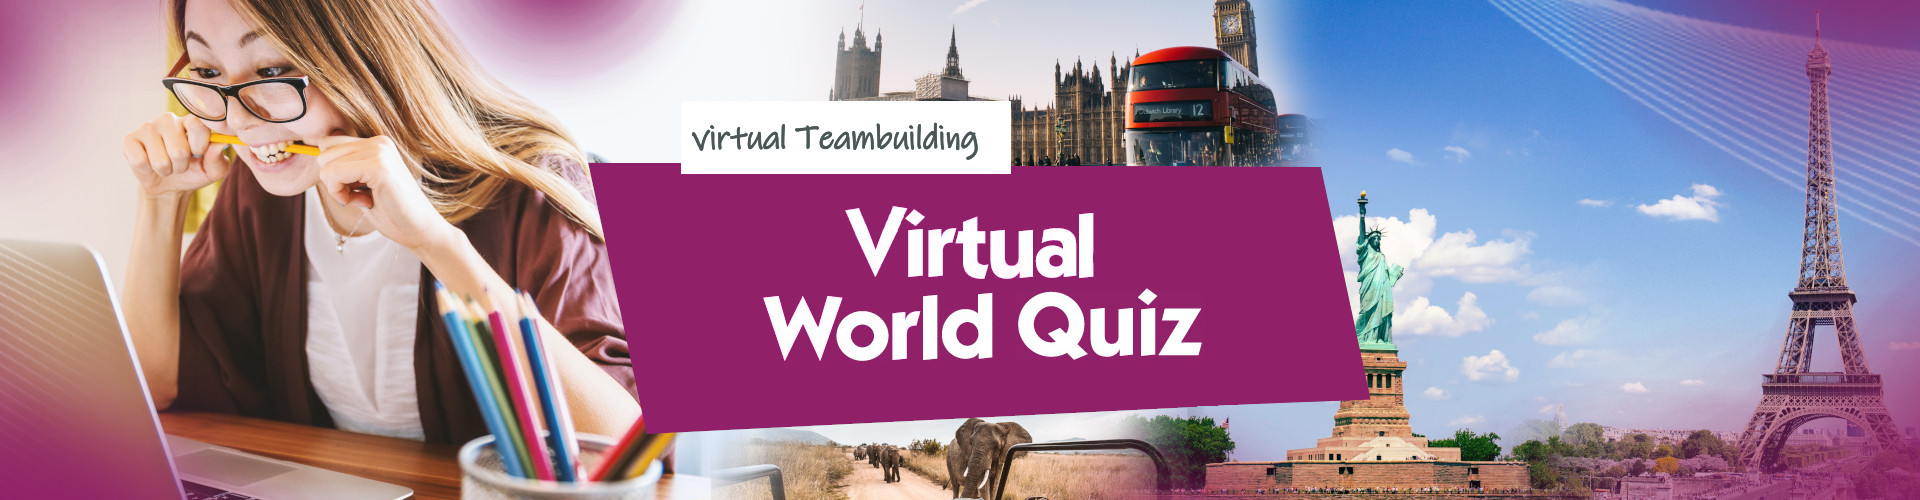 Virtual World Quiz banner